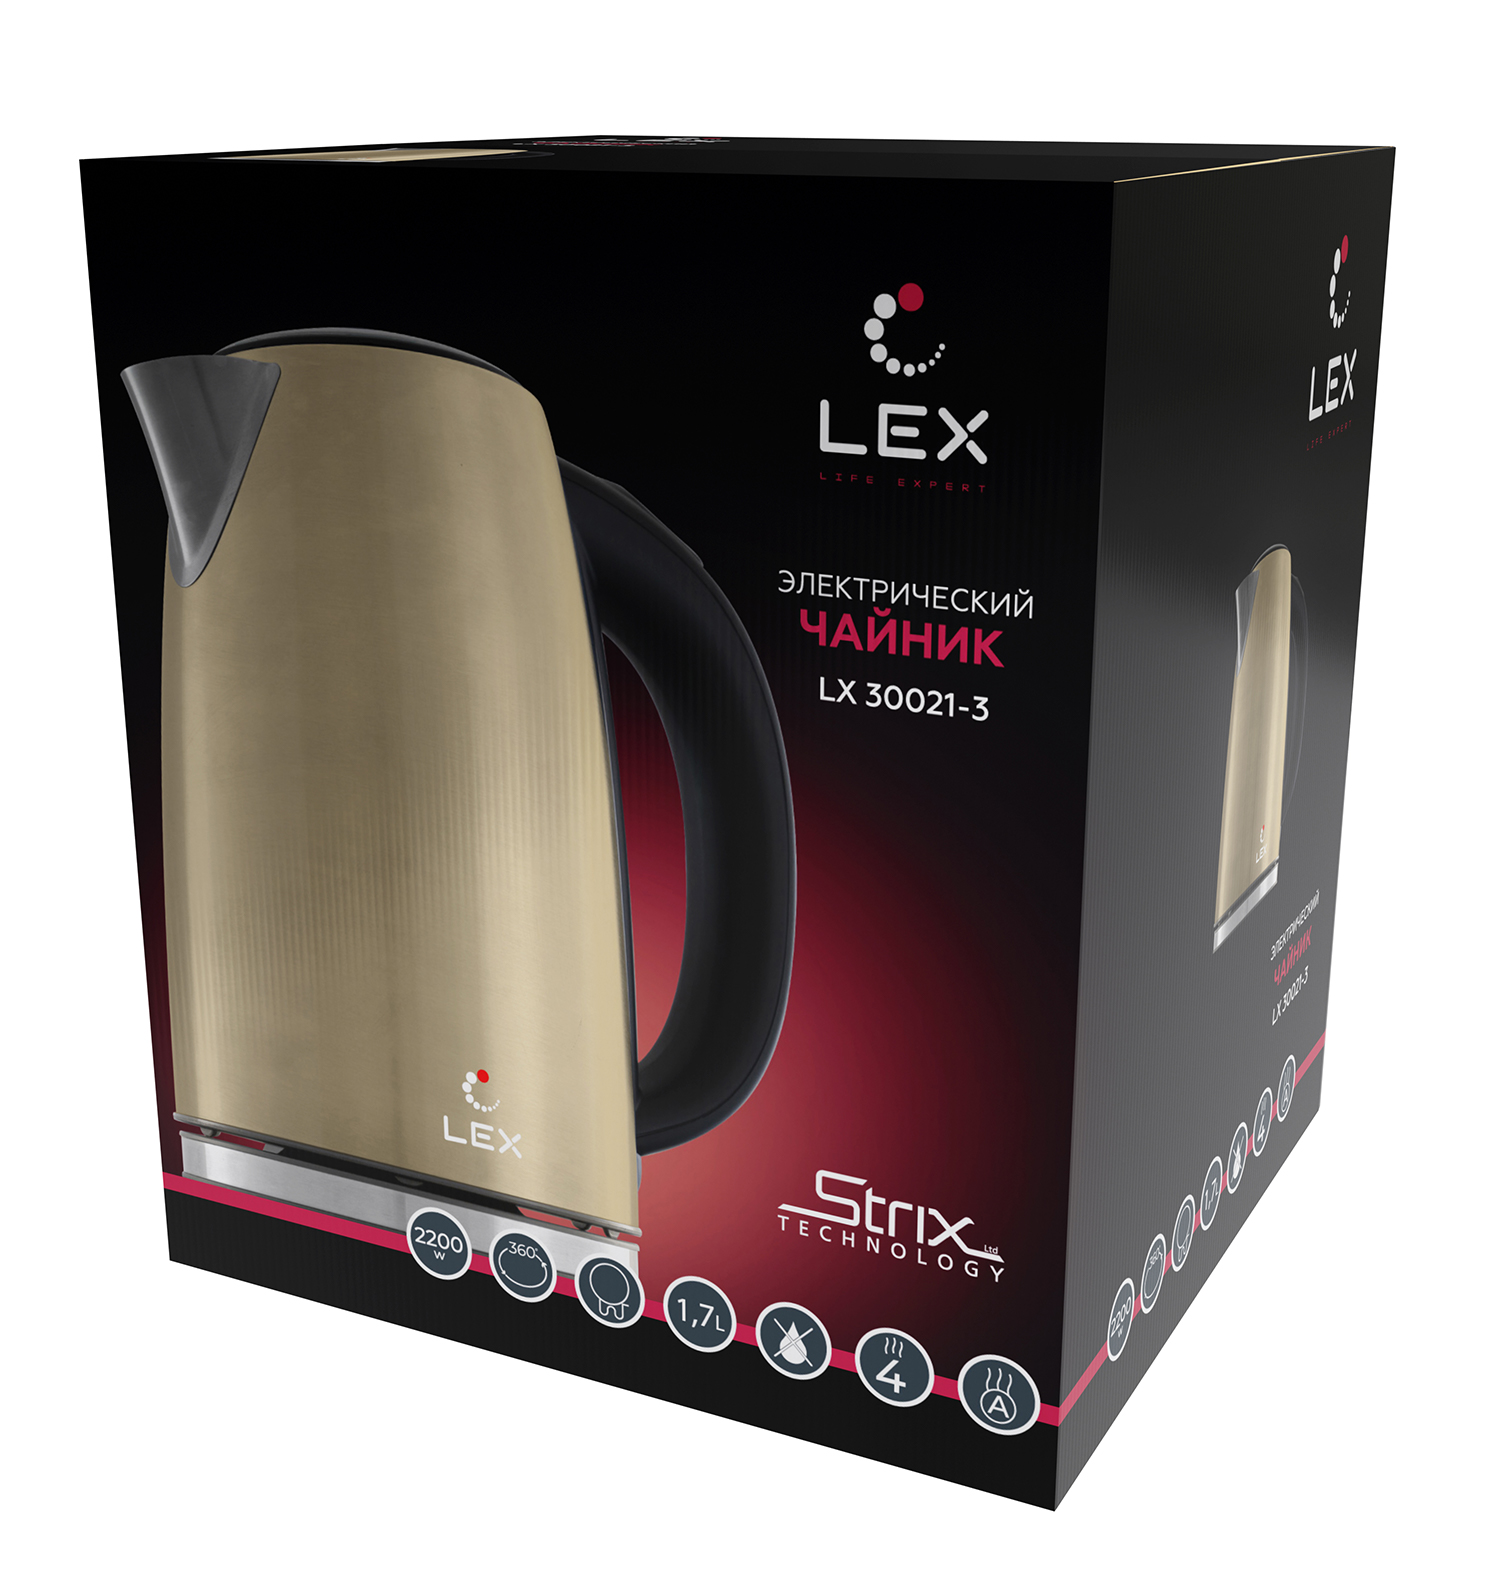 LEX LX 30021-3